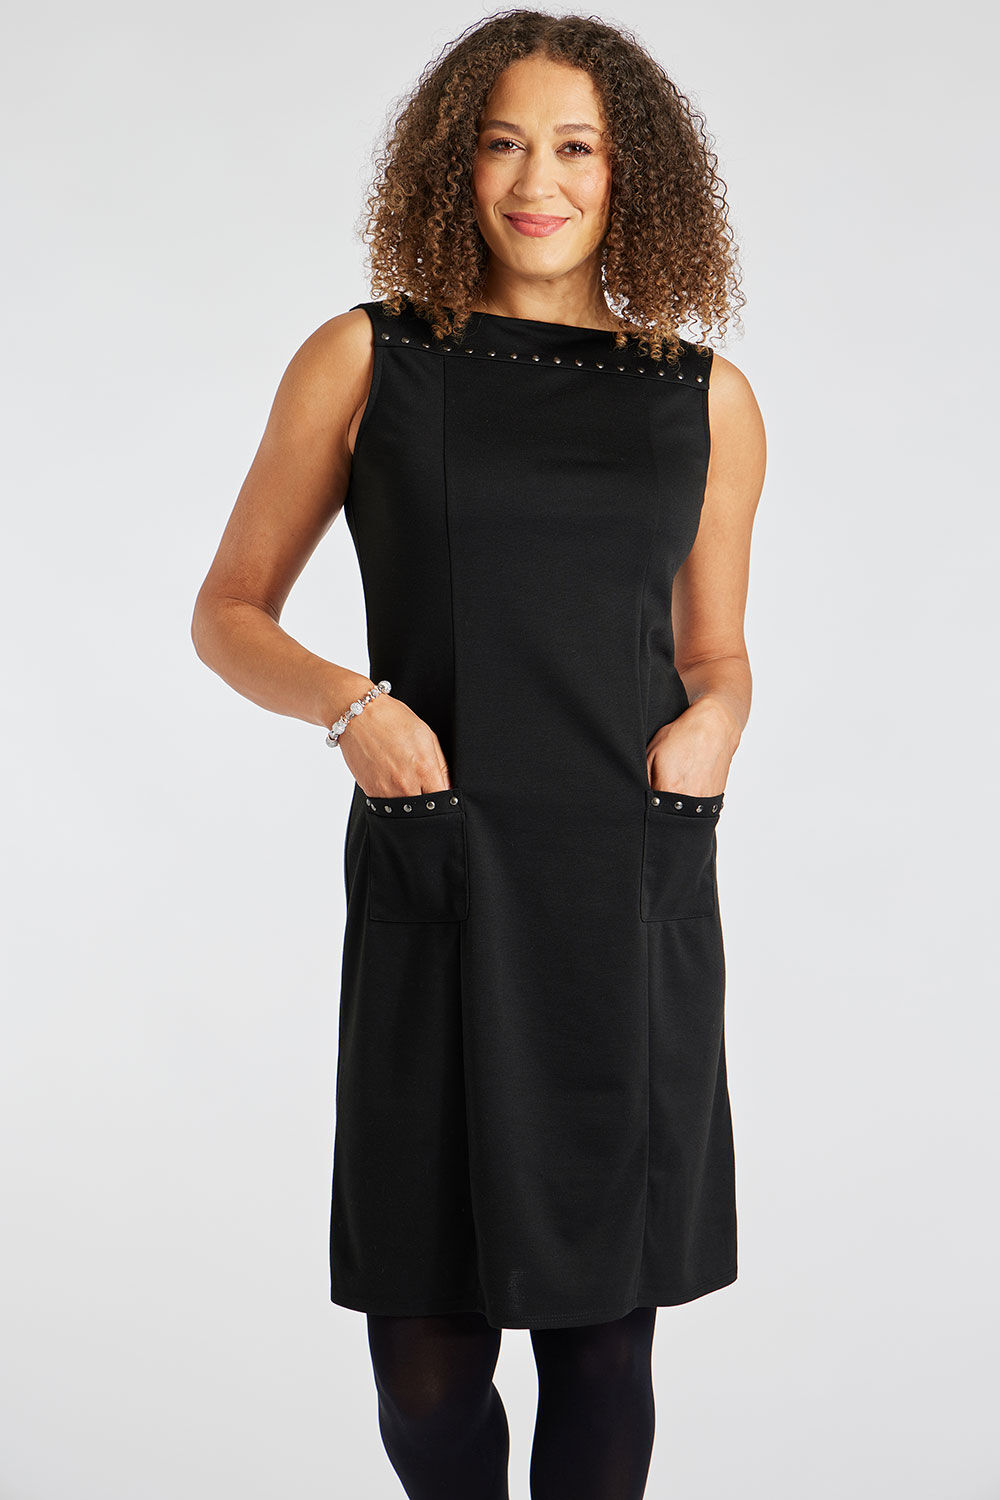 Bonmarche Black Sleeveless Plain Ponte Dress With Stud Detail, Size: 10